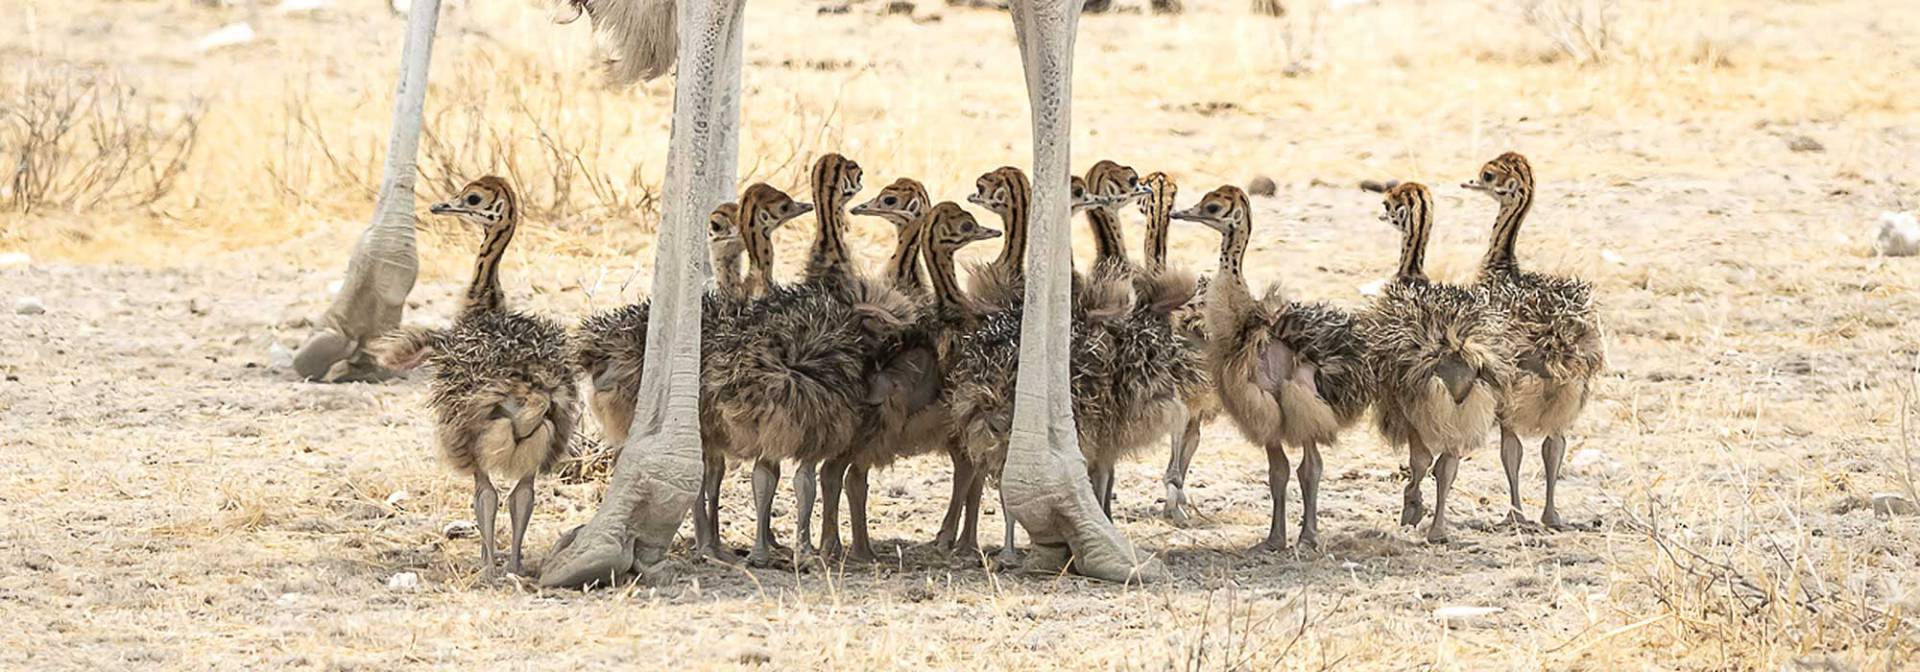 Kalahari - Straußenfamilie